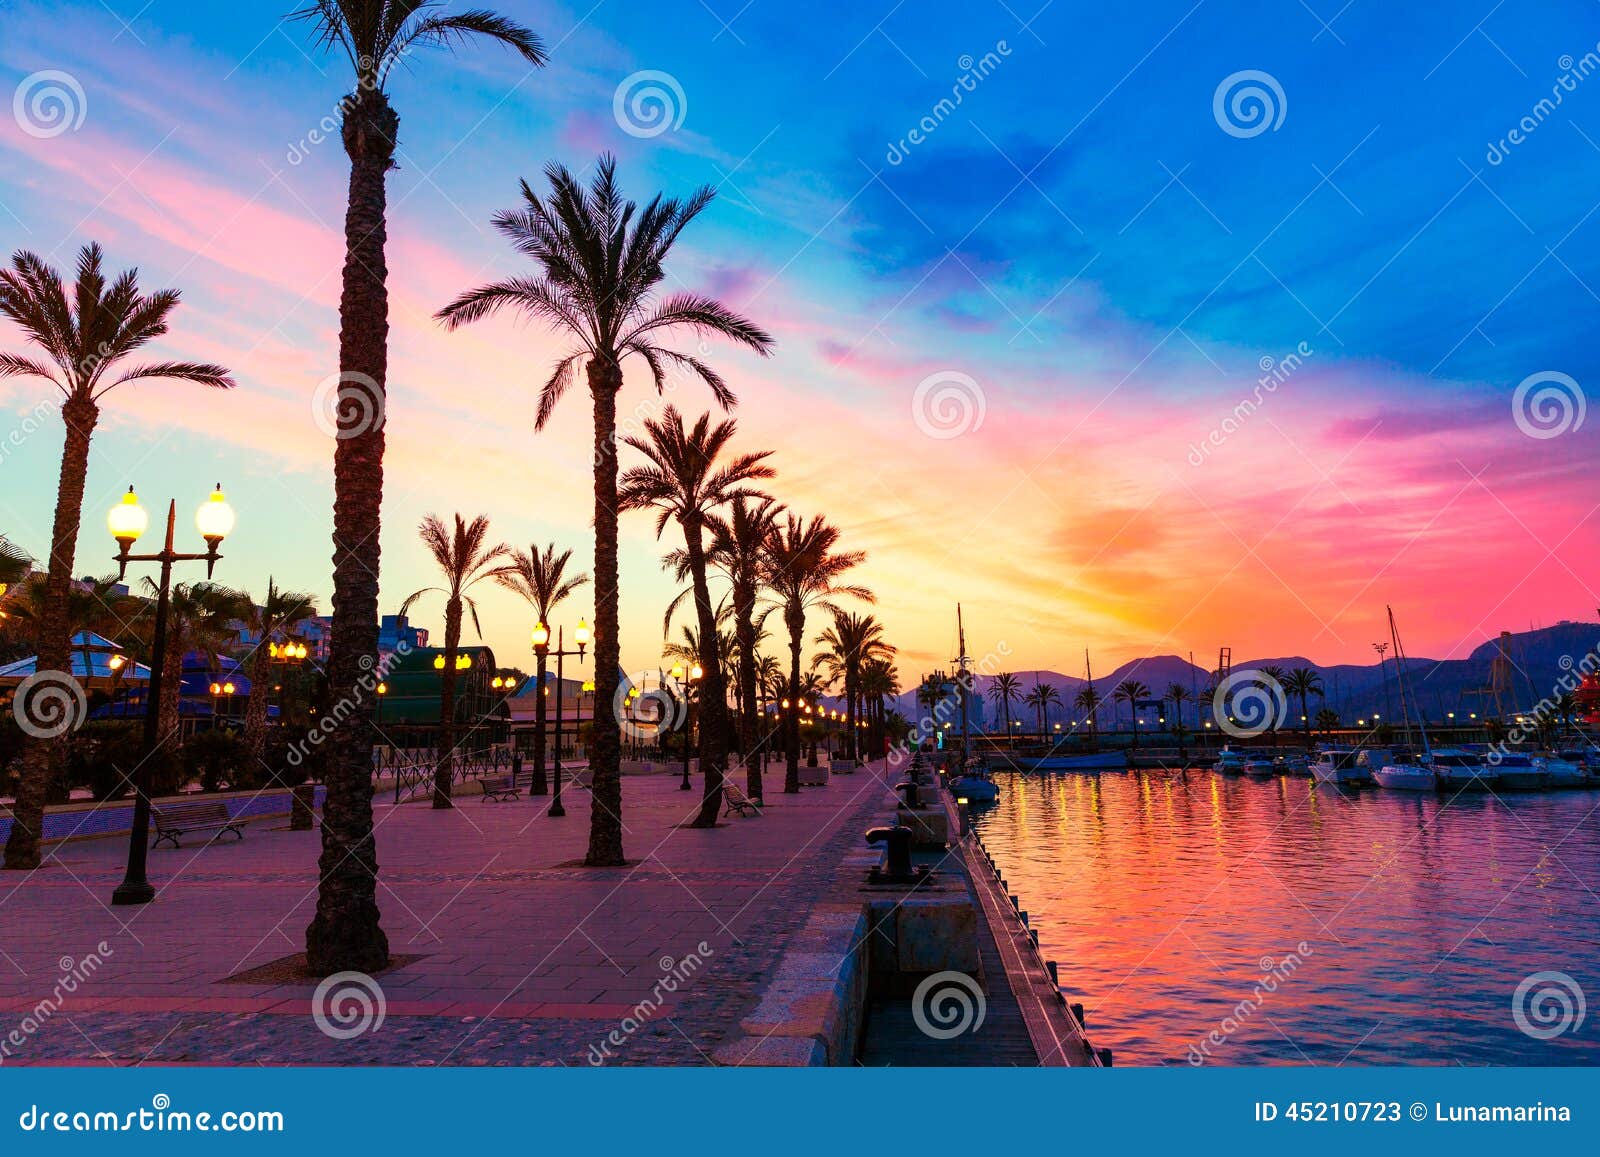 cartagena murcia port marina sunset in spain